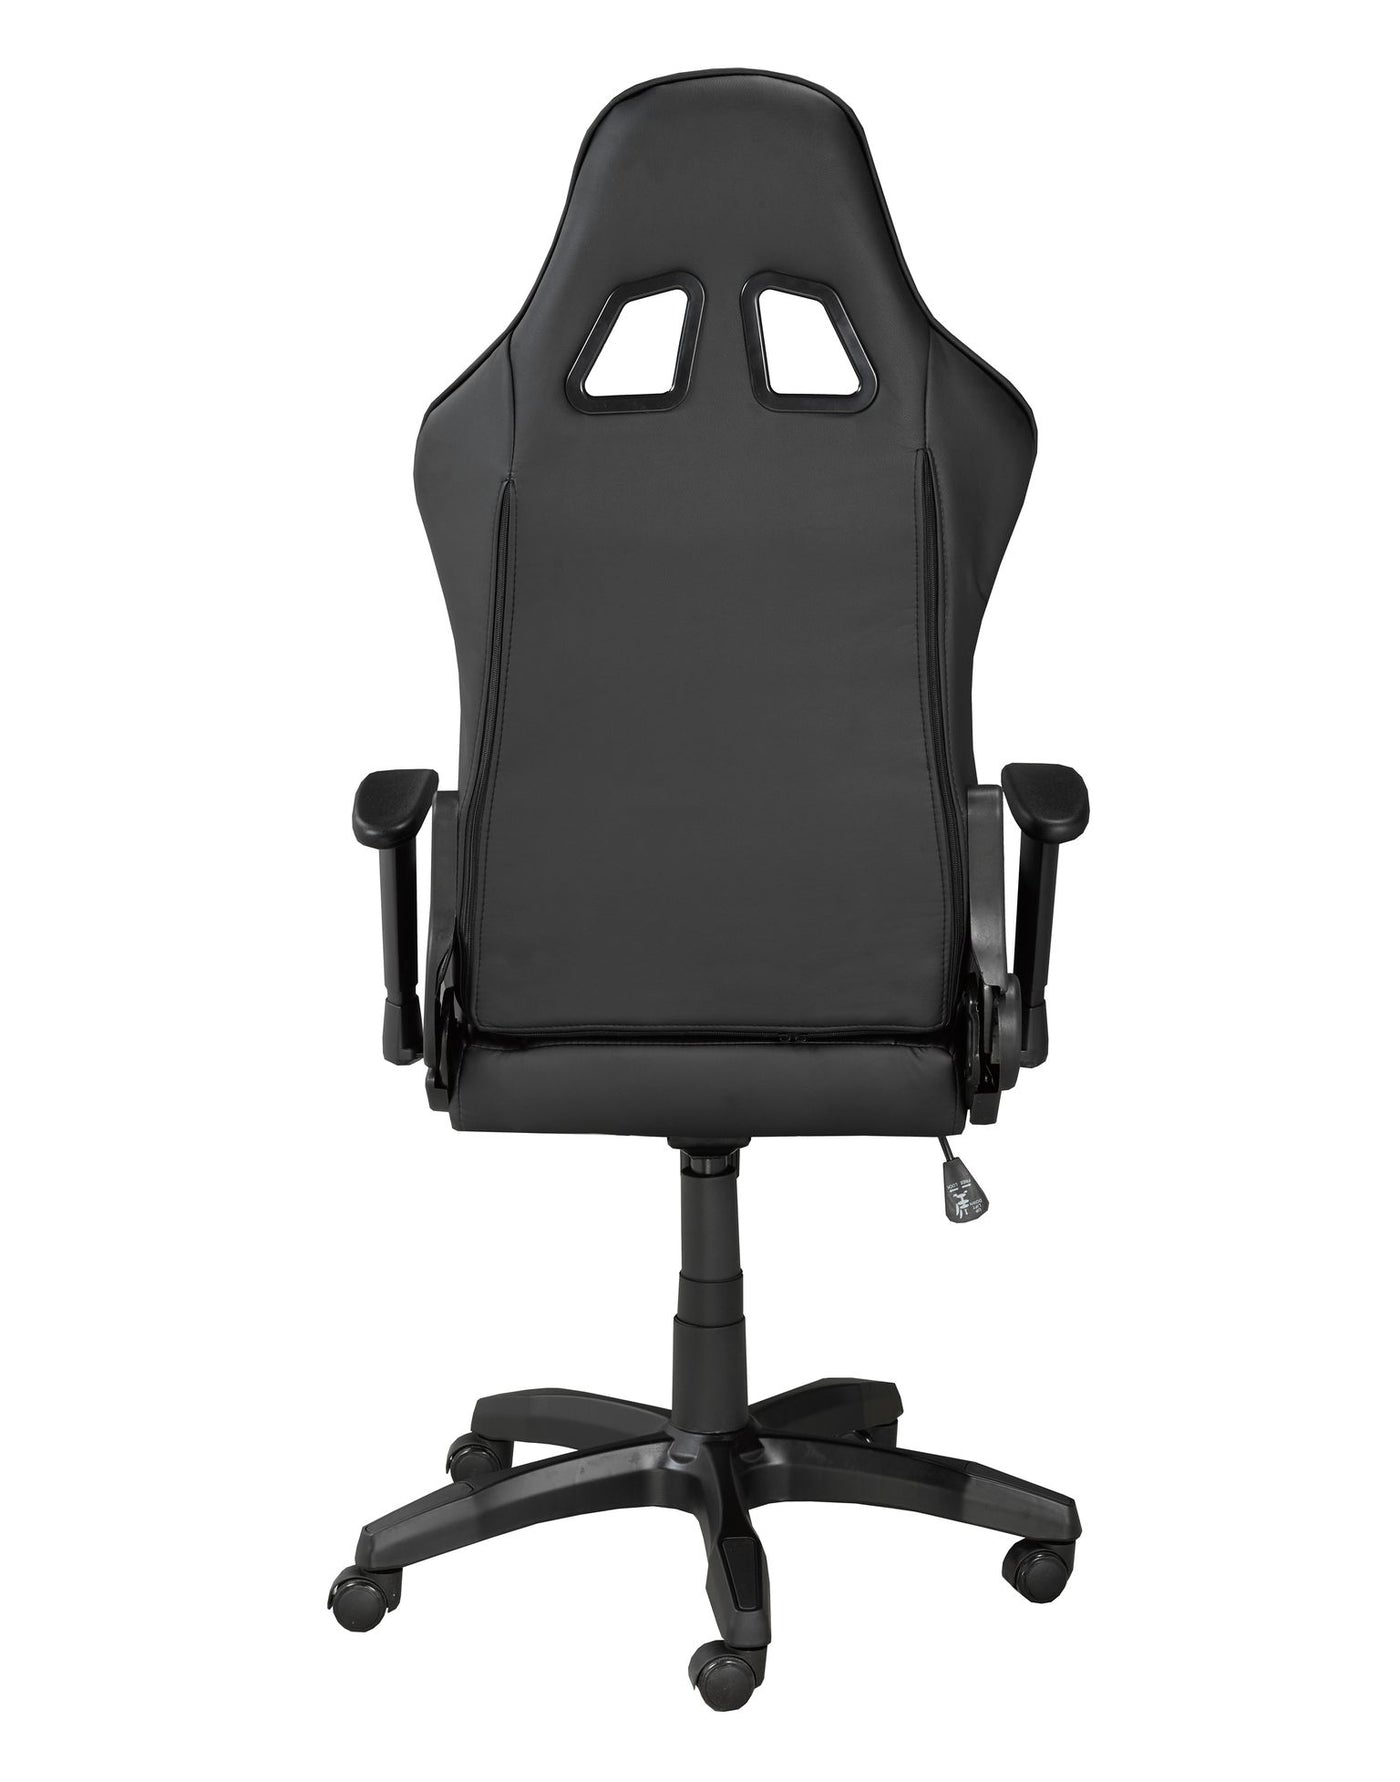 Edward Gaming Chair - Black